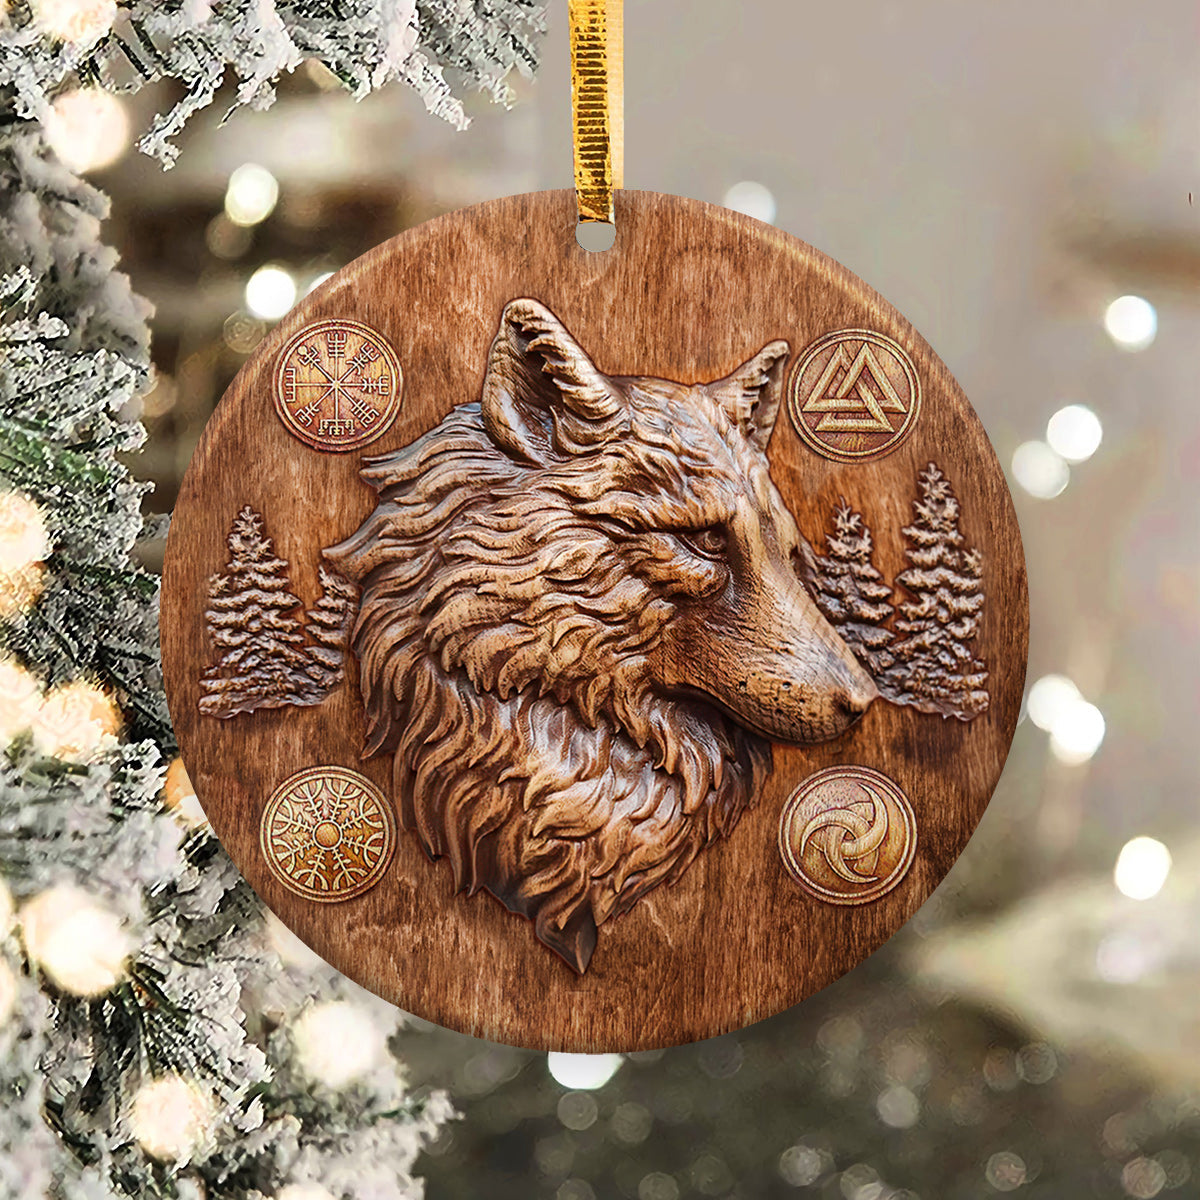 Wolf Viking 2 Ceramic Circle Ornament - Decorative Ornament - Christmas Ornament